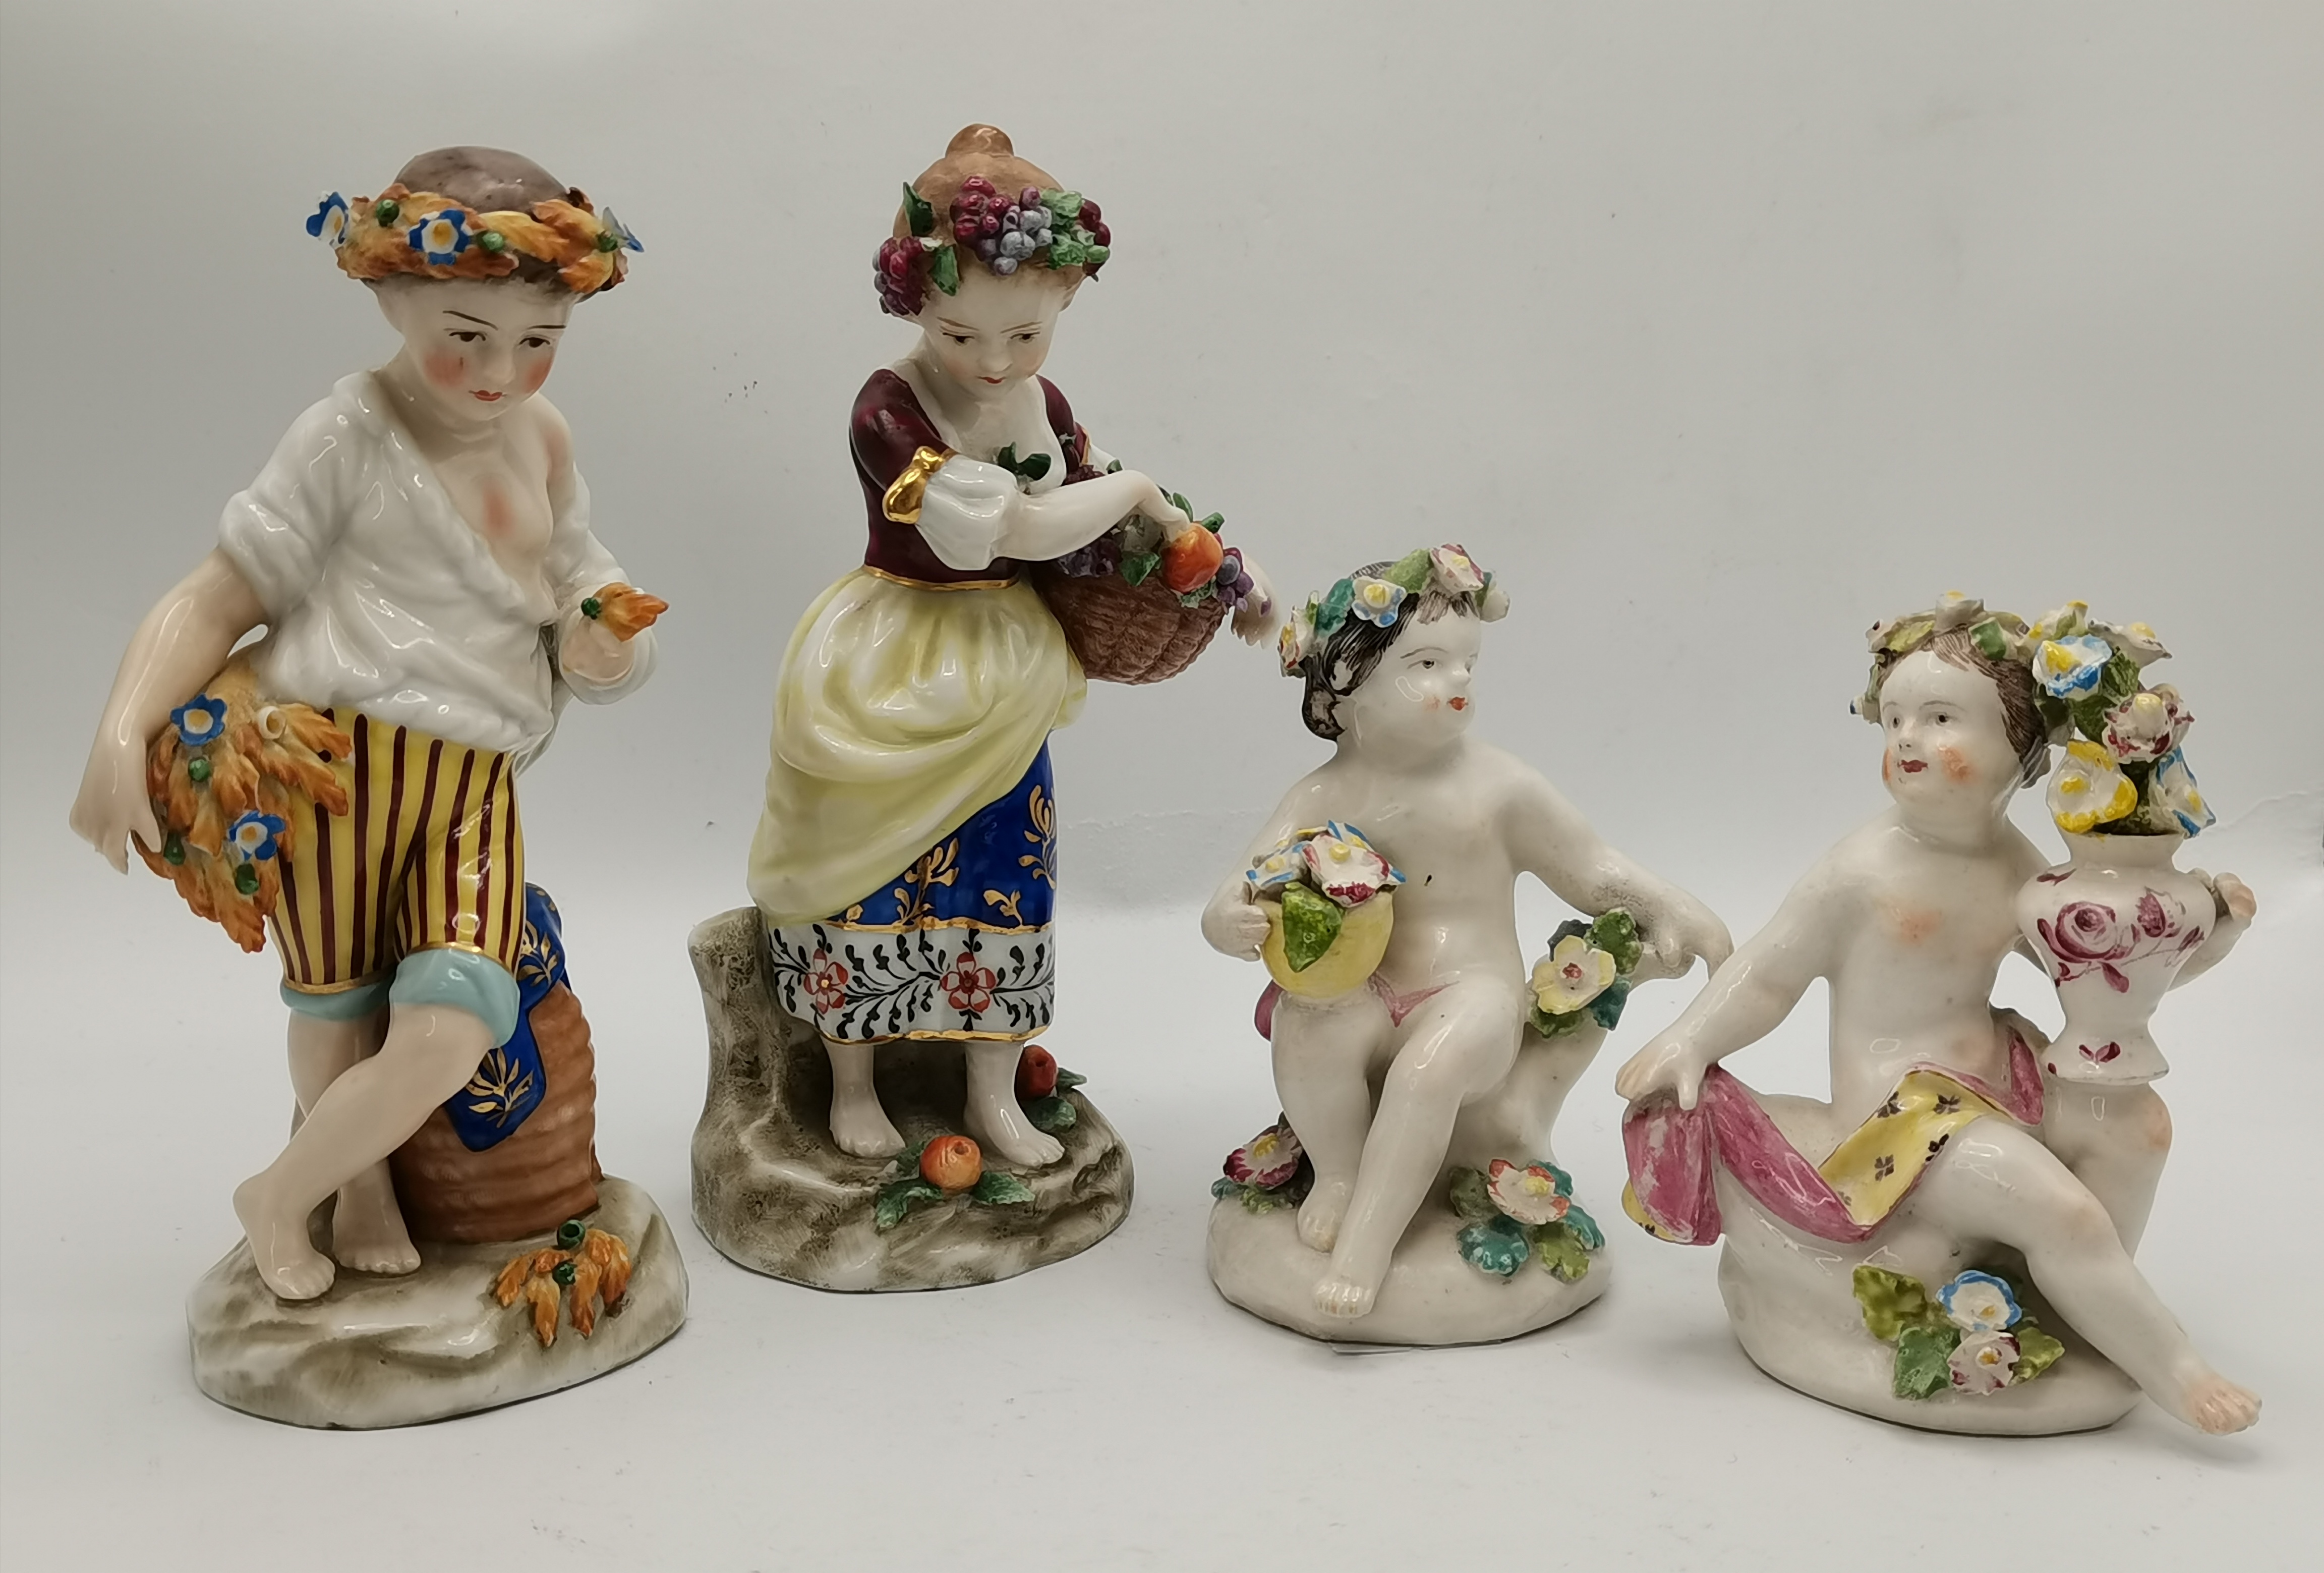 2 x sets of continental porcelain figures